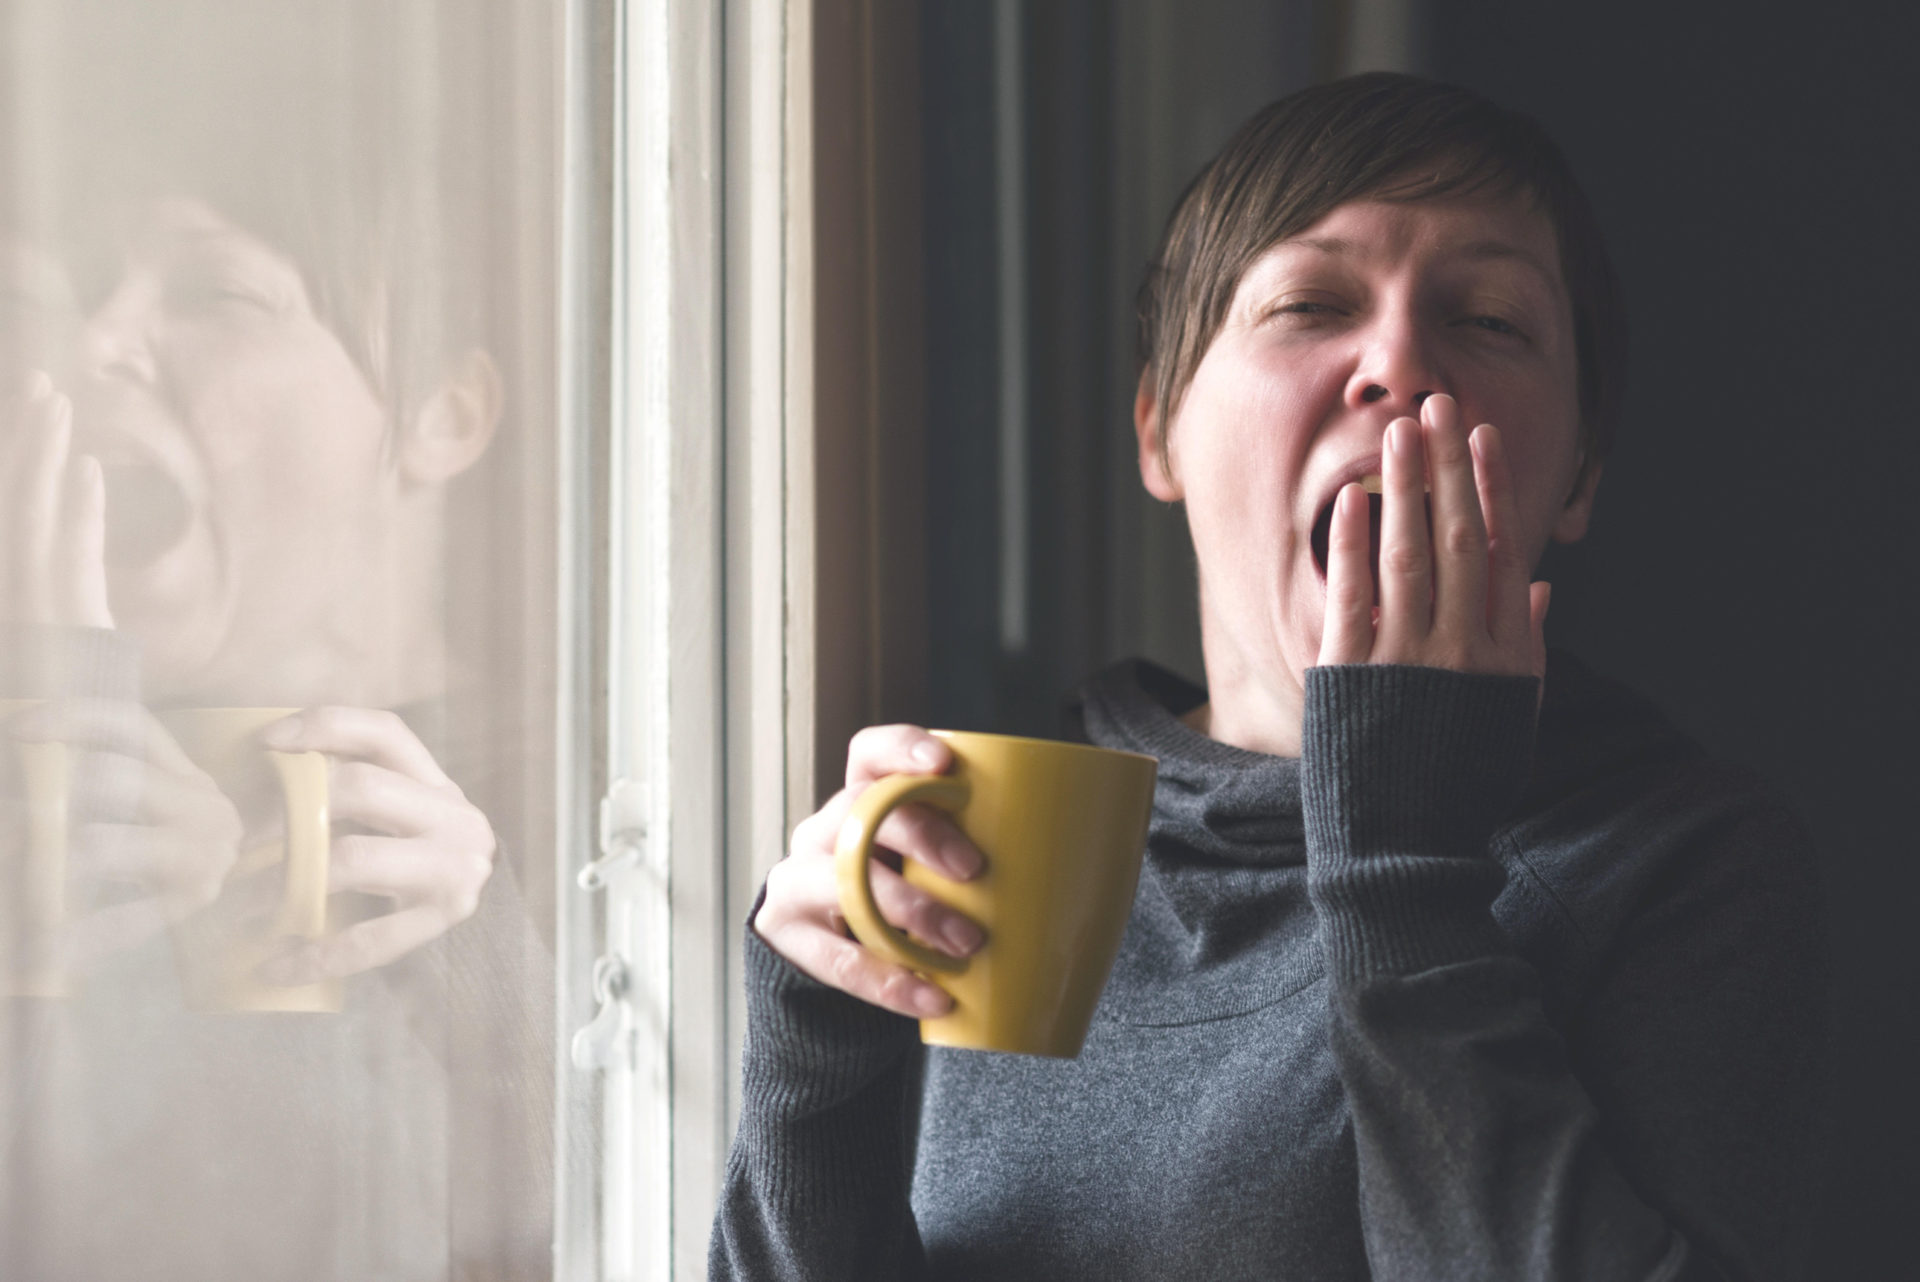 A yawning woman. Igor Stevanovic / Alamy